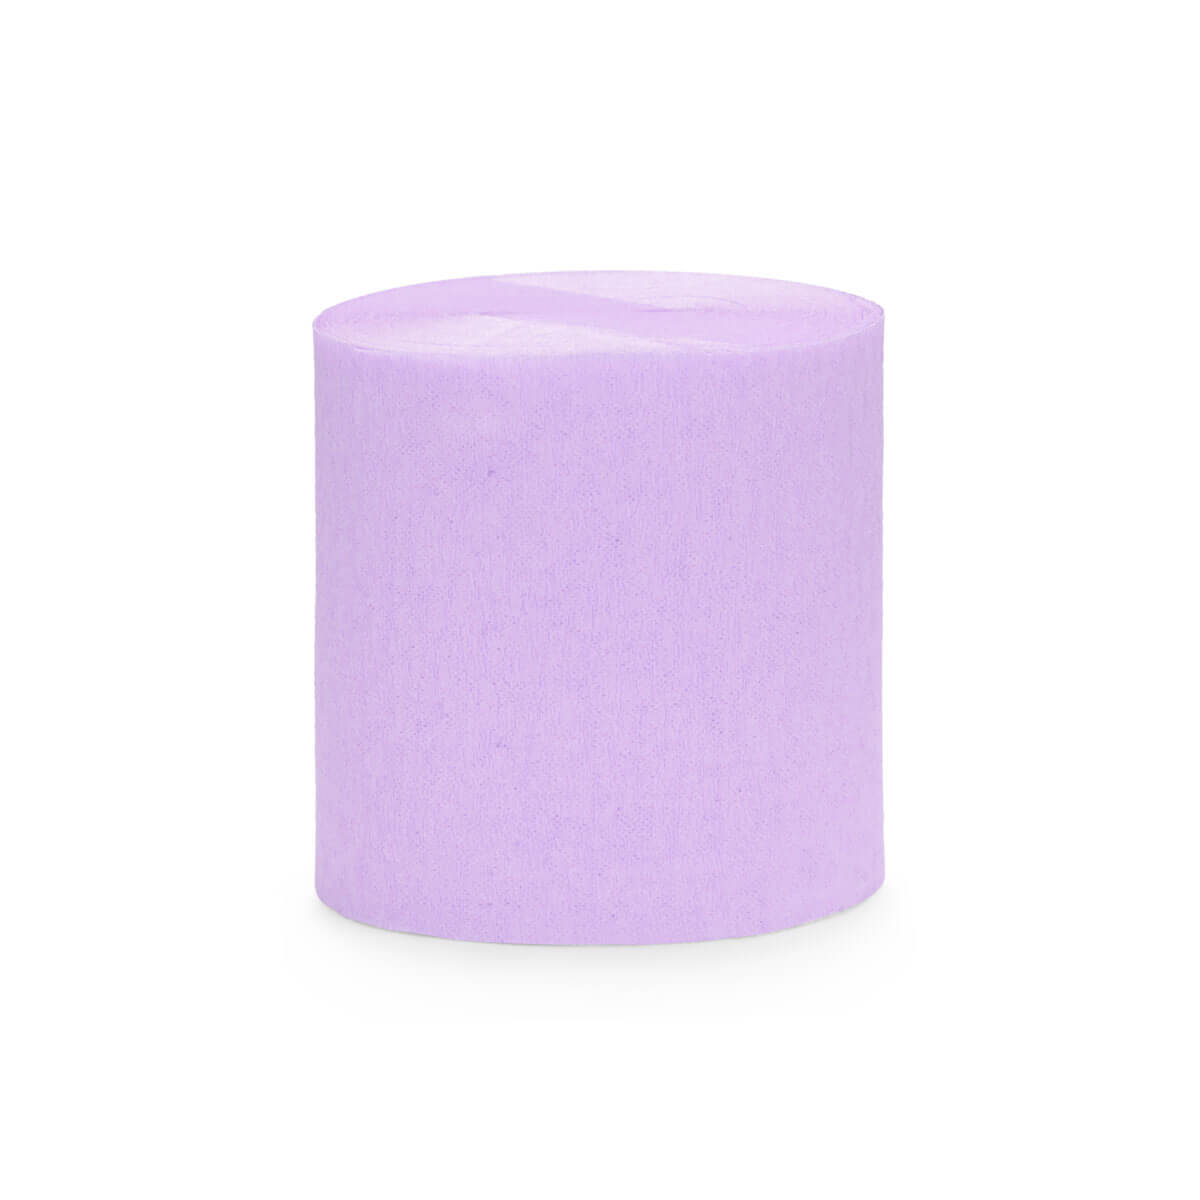 Kreppbänder lila pastell, 4 Rollen à 5cm x 10m